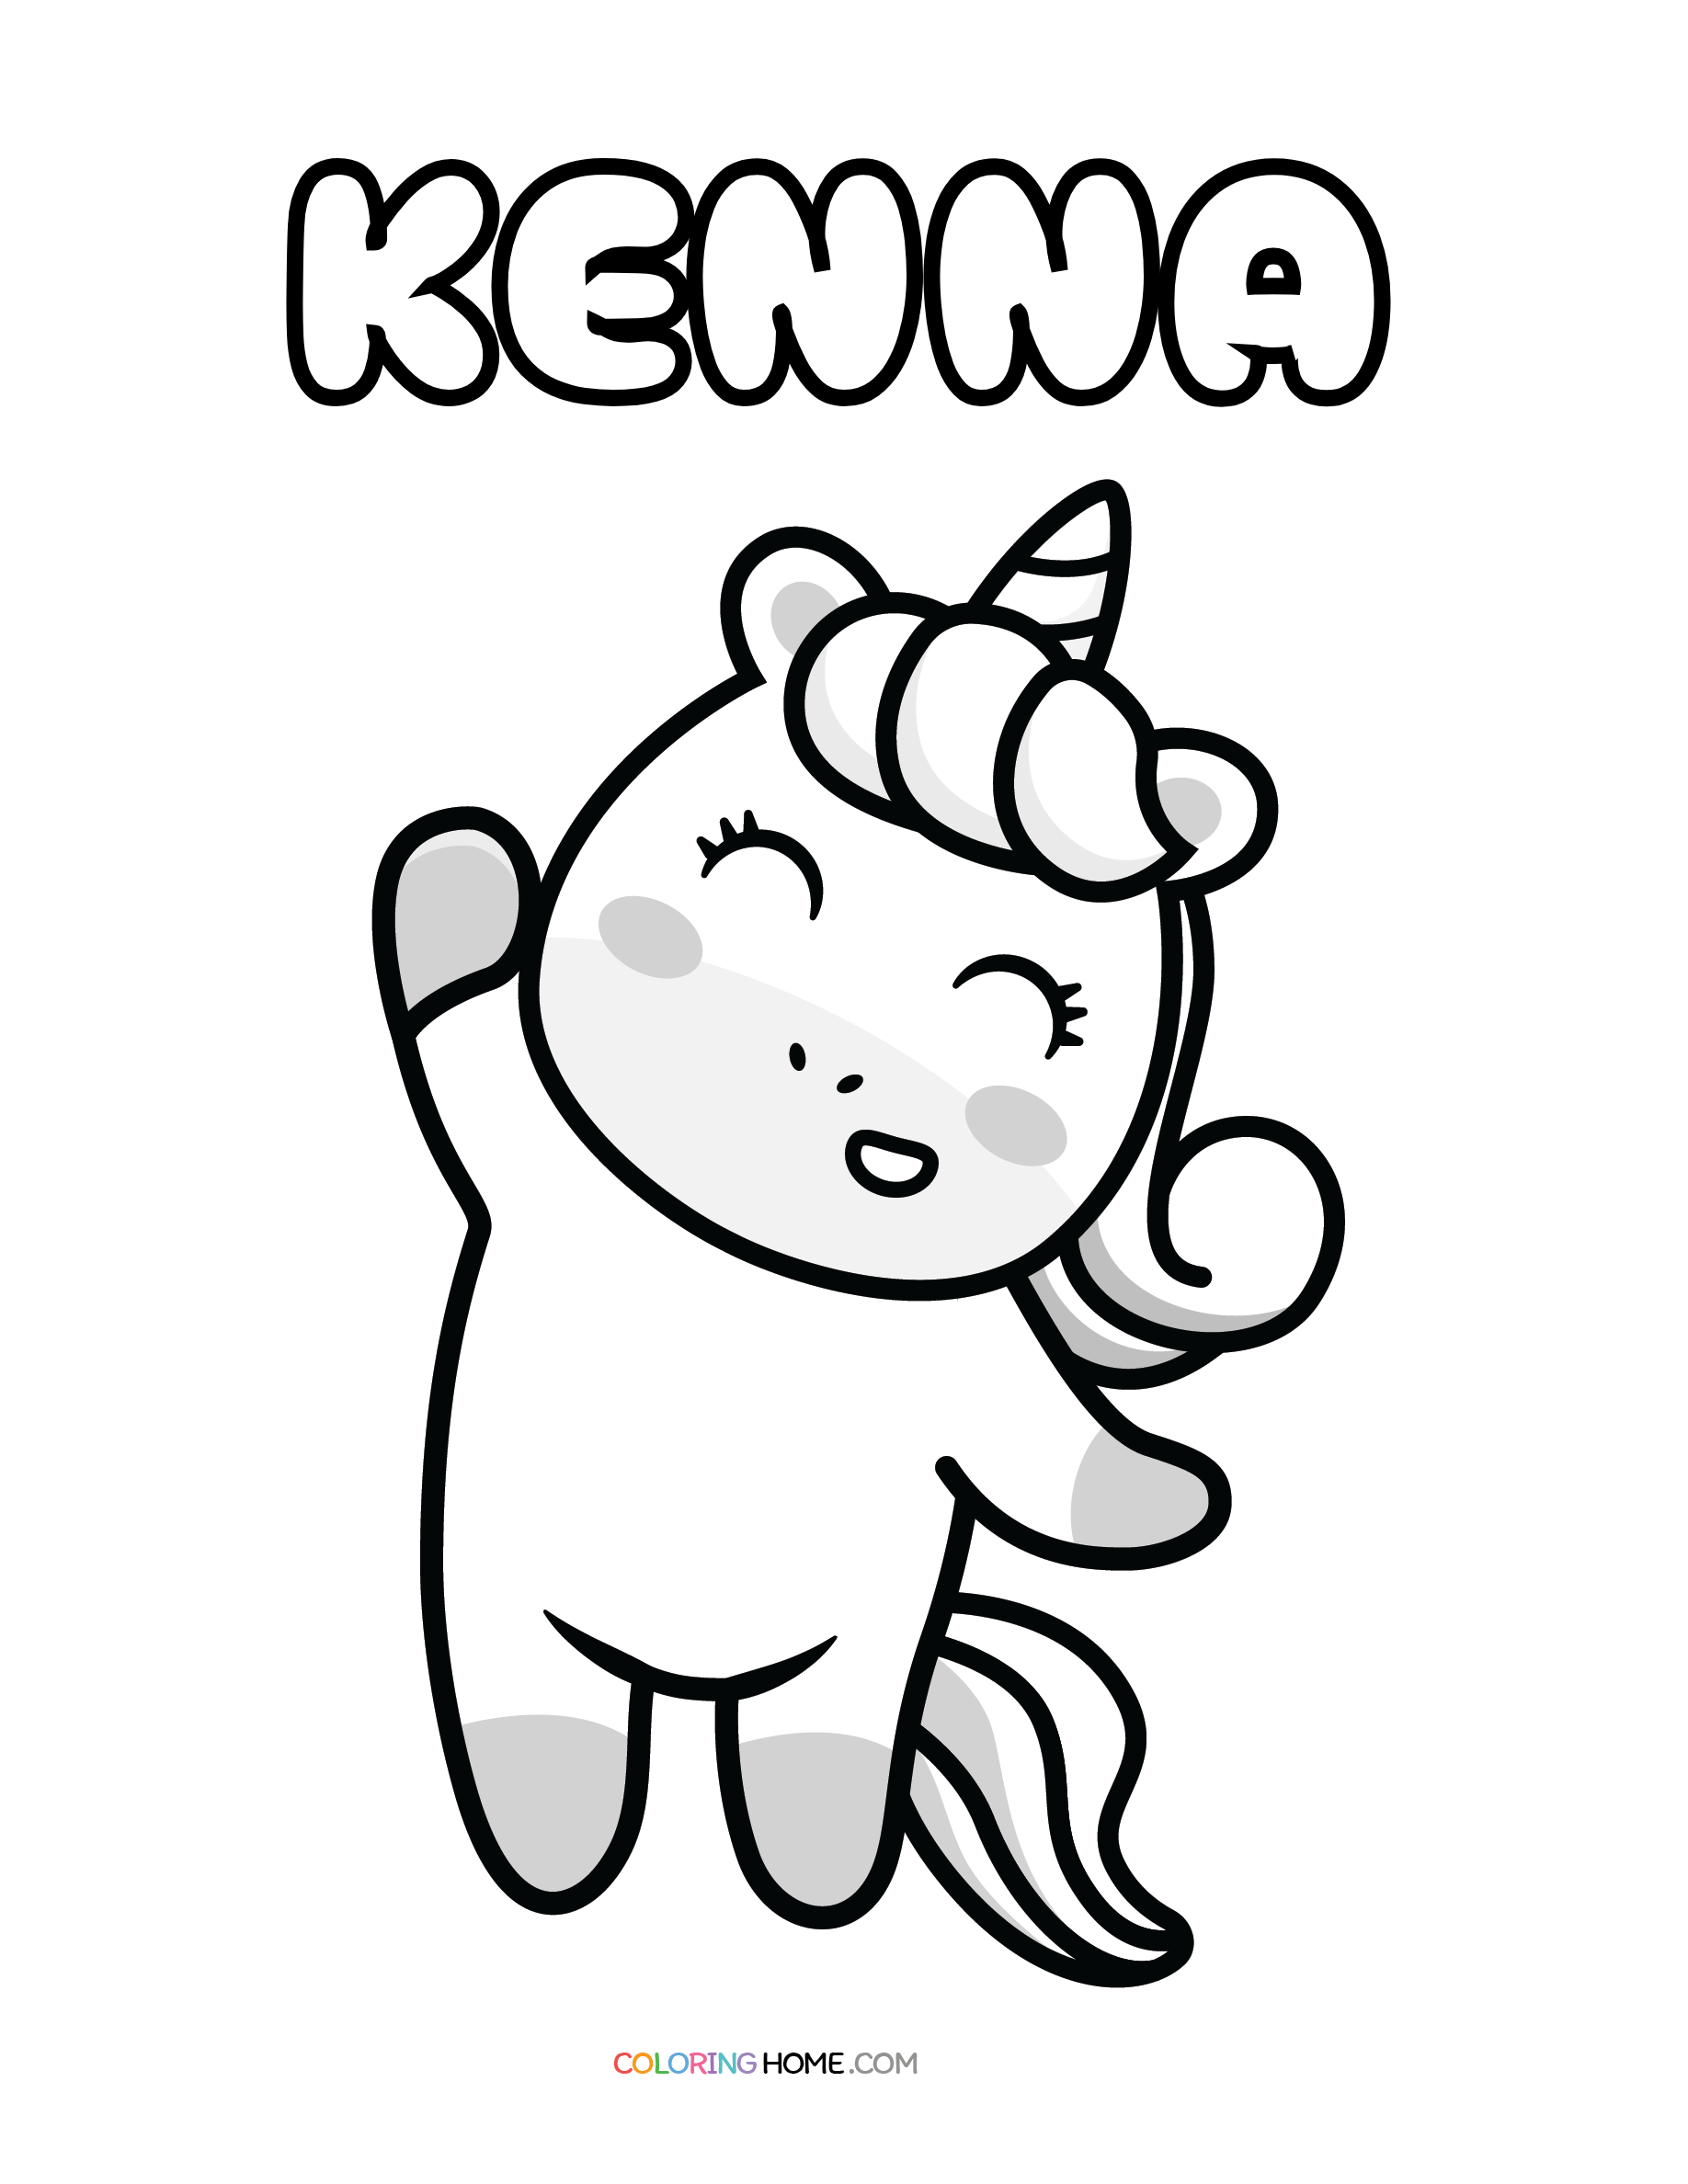 Kenna unicorn coloring page